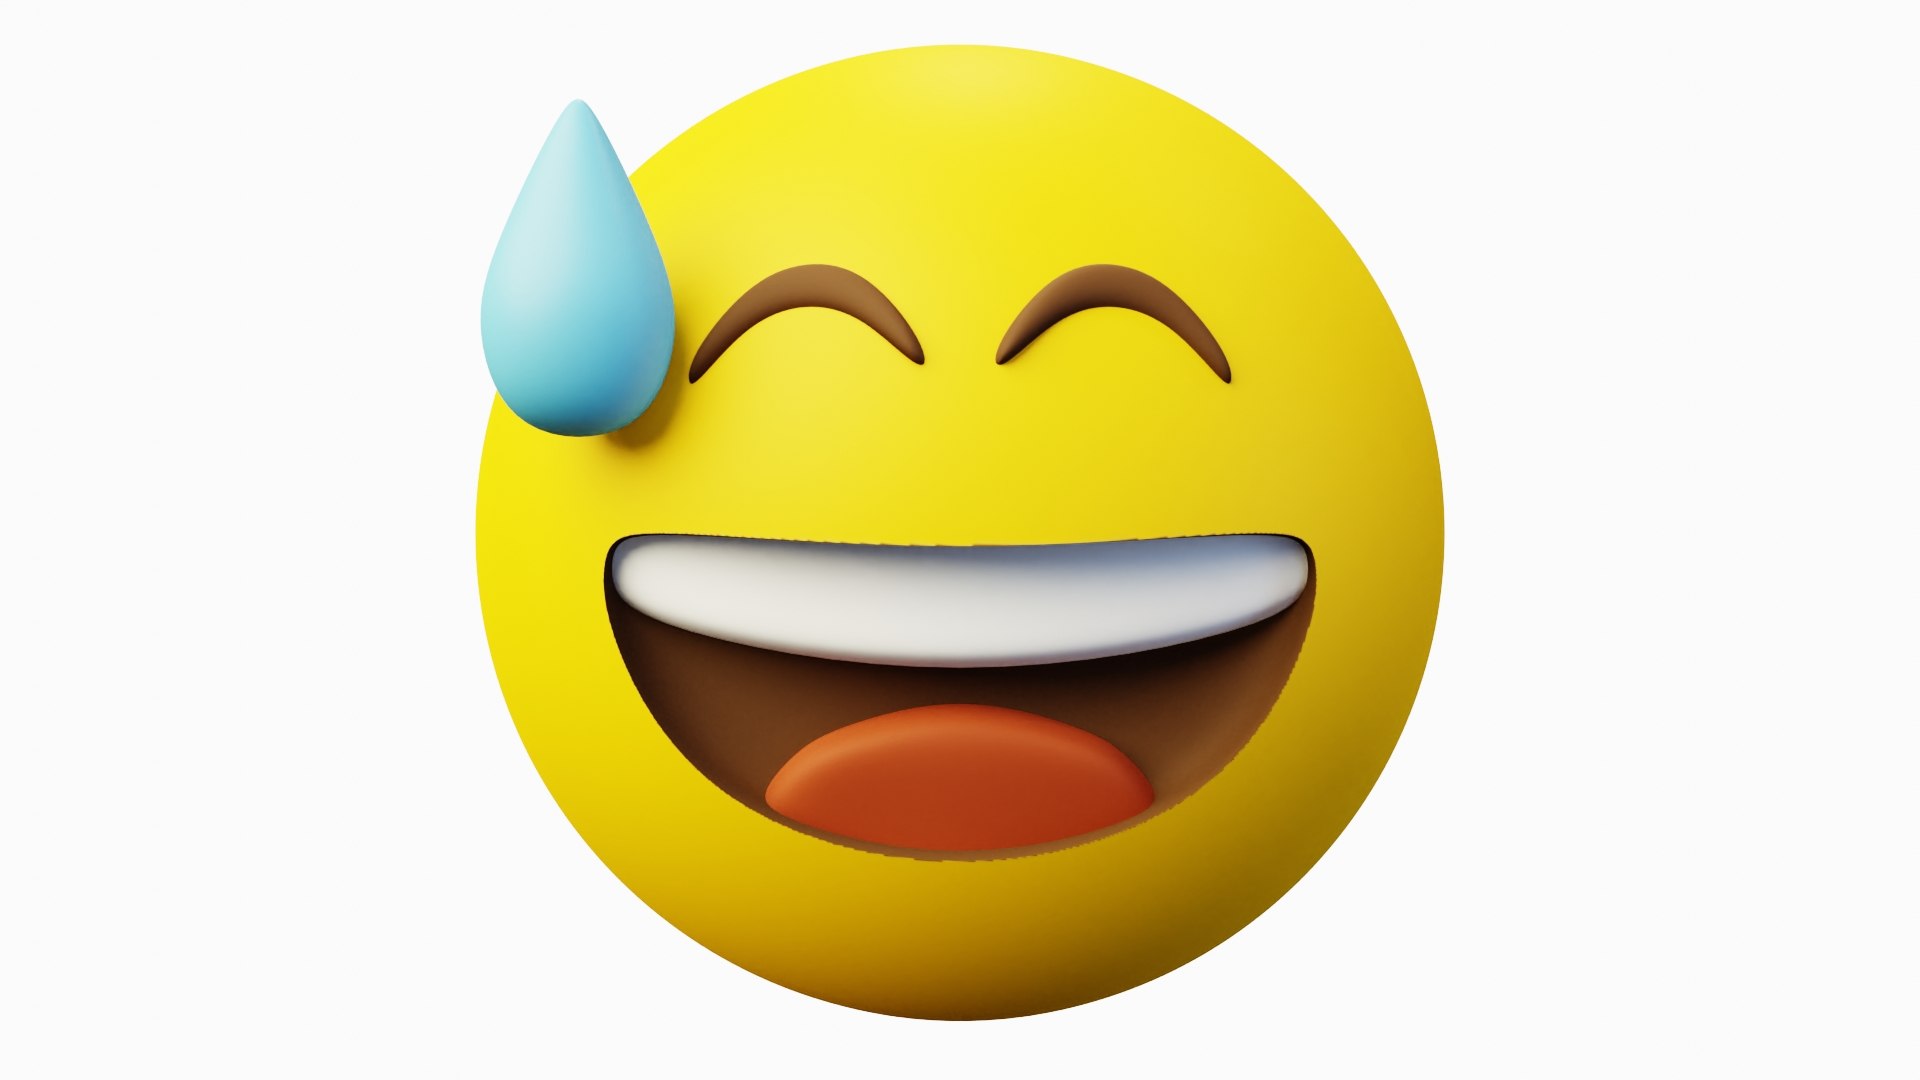 Afraid or Scared Yellow Ball Emoticon Emoji or Smiley 3D model